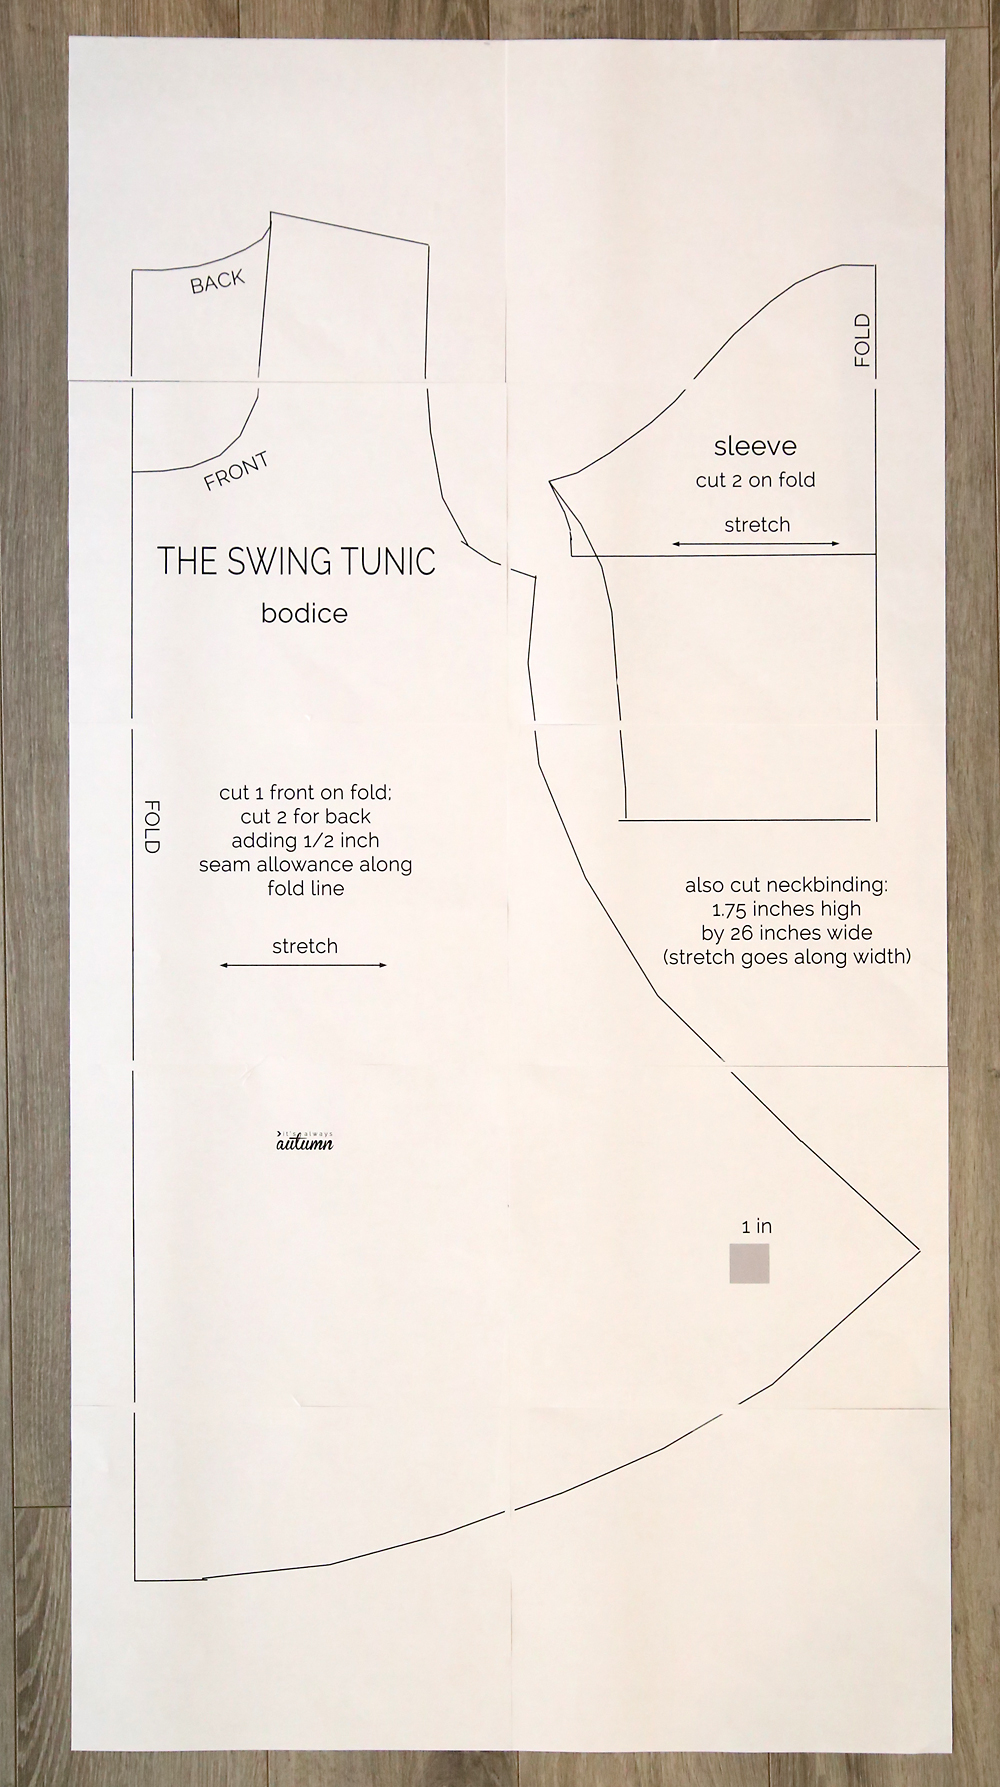 The swing tunic sewing pattern